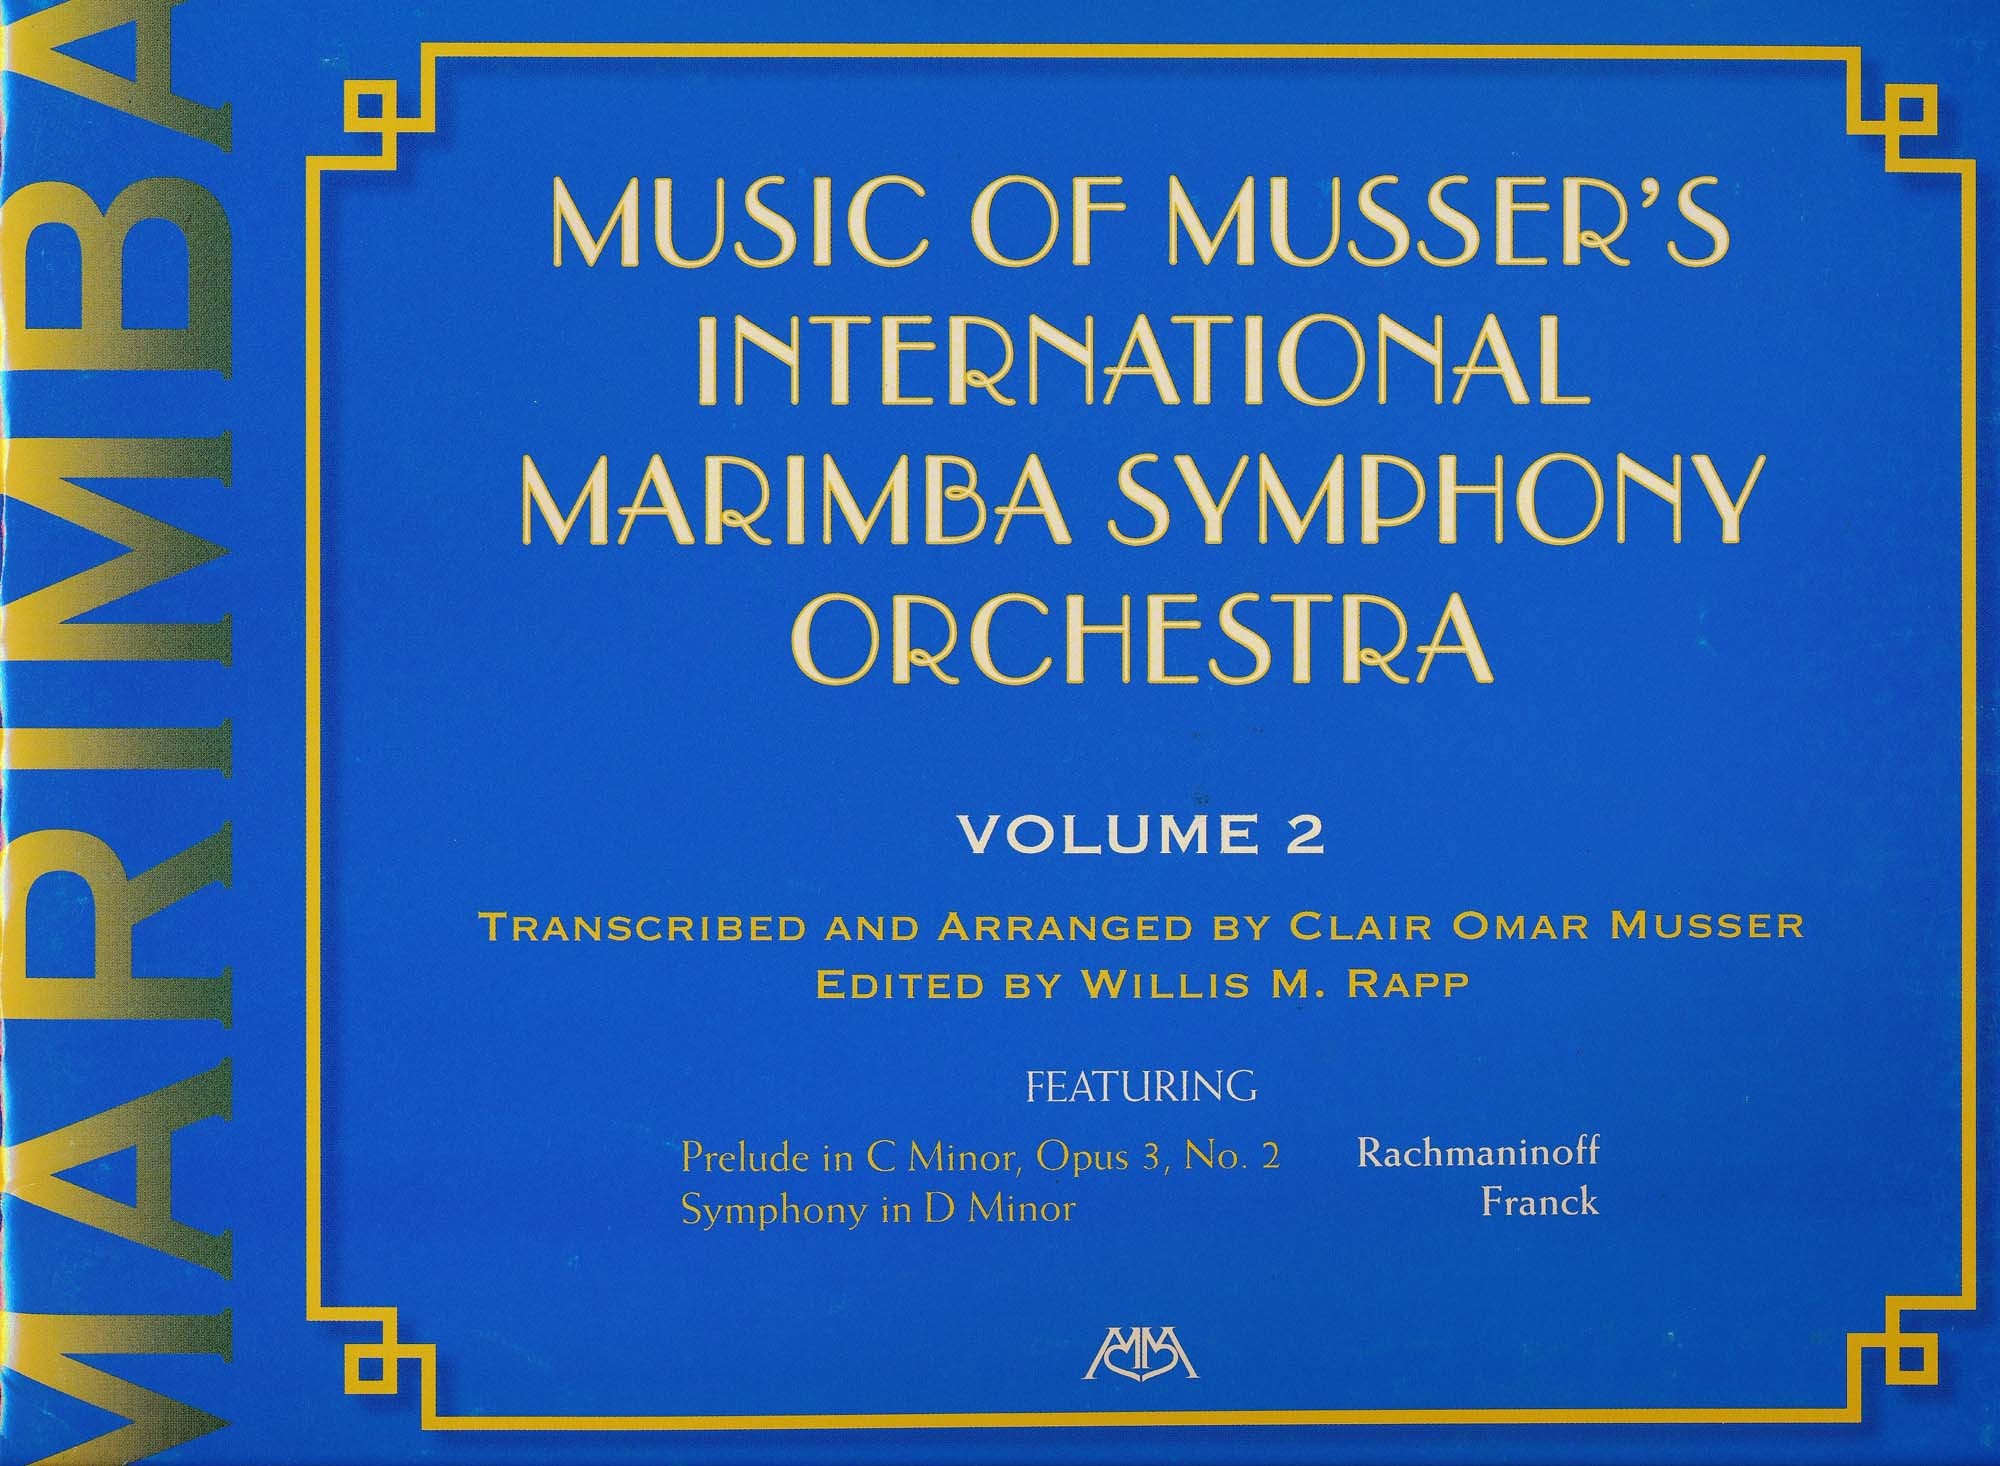 Music of Musser's International Marimba Symphony Orchestra Volume 2